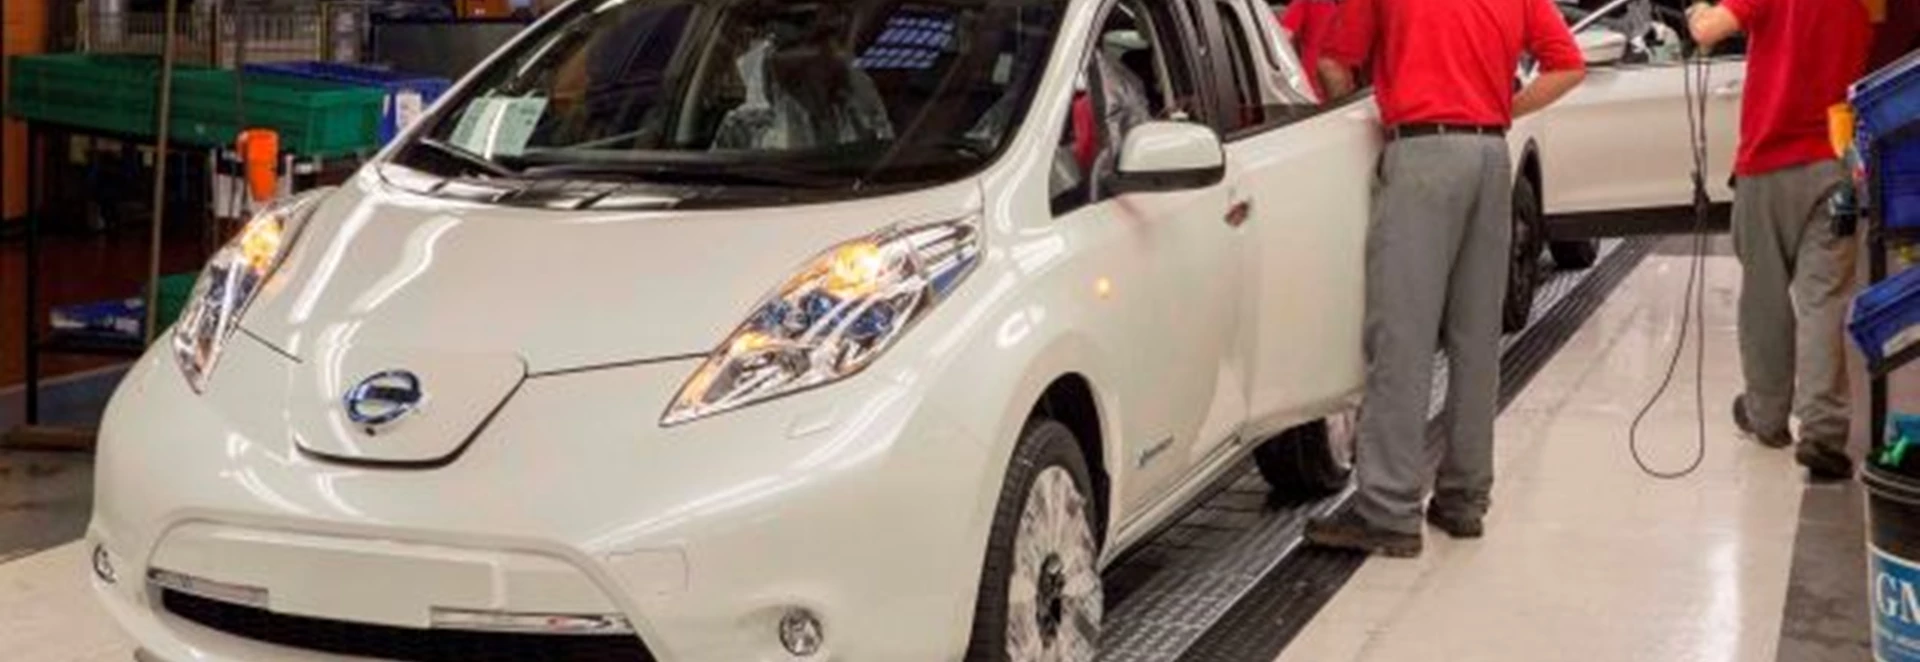 Nissan confirms £26.5 million investment in EV batteries